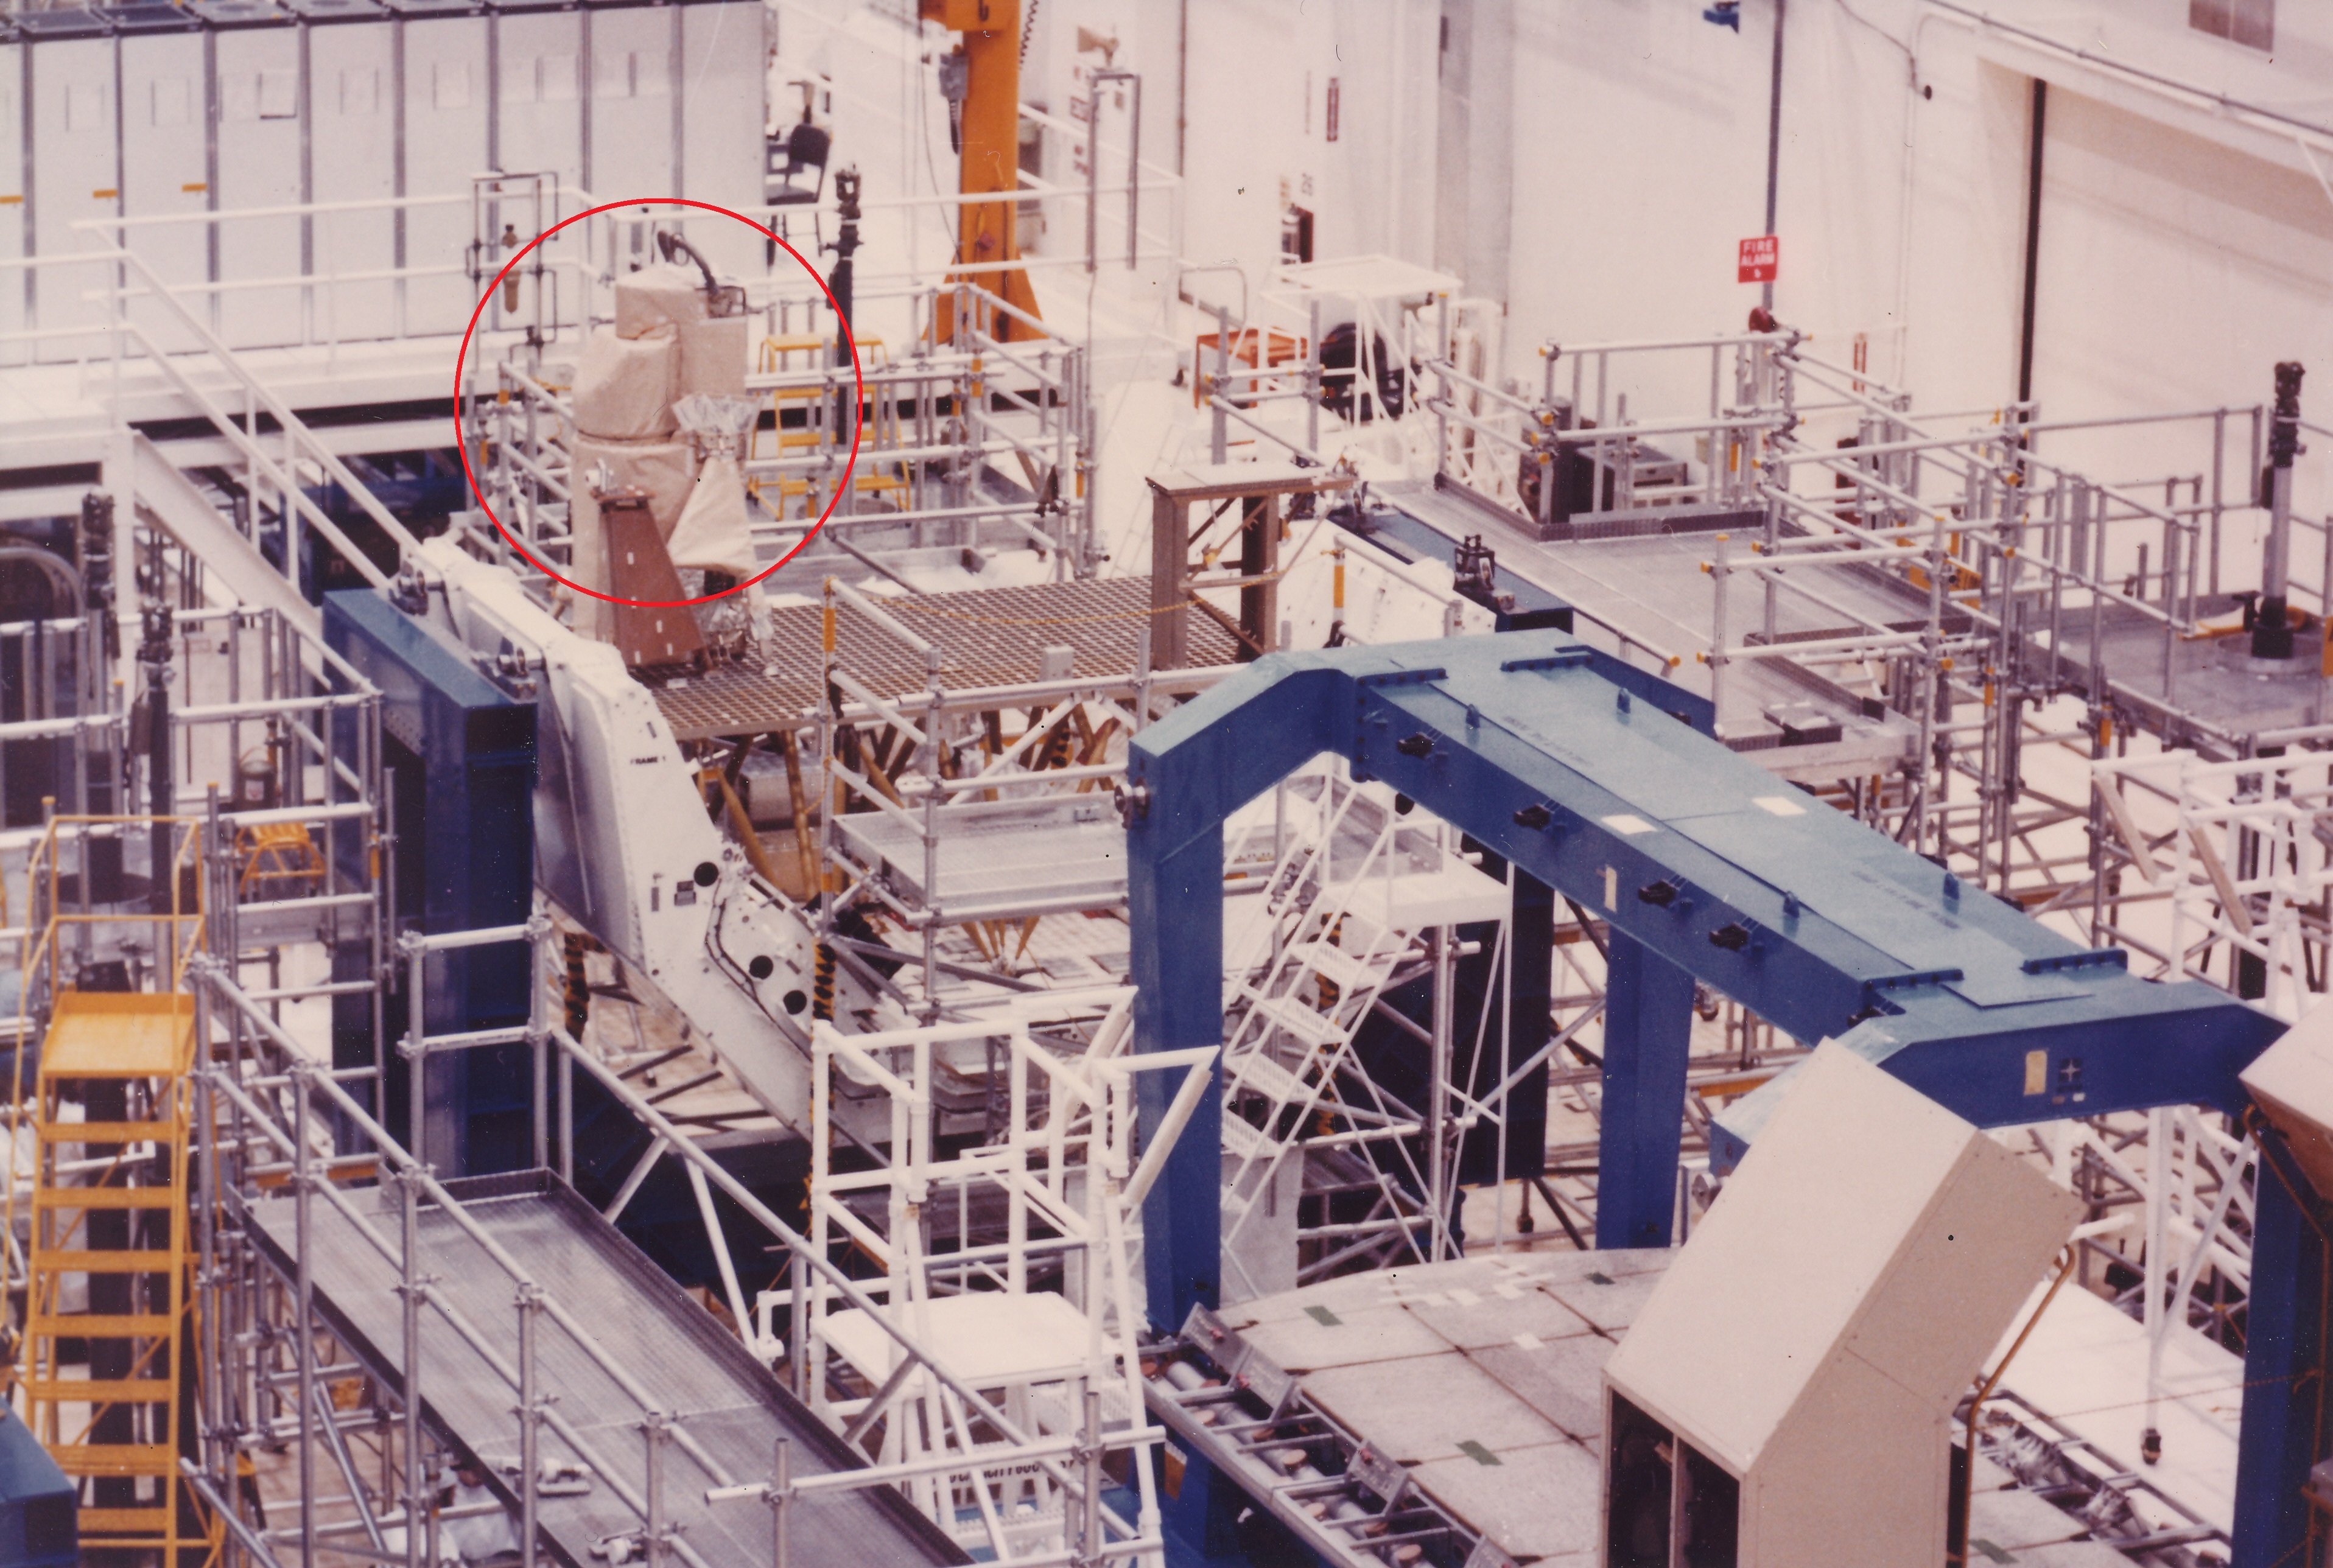 Grille spectrometer on spacelab